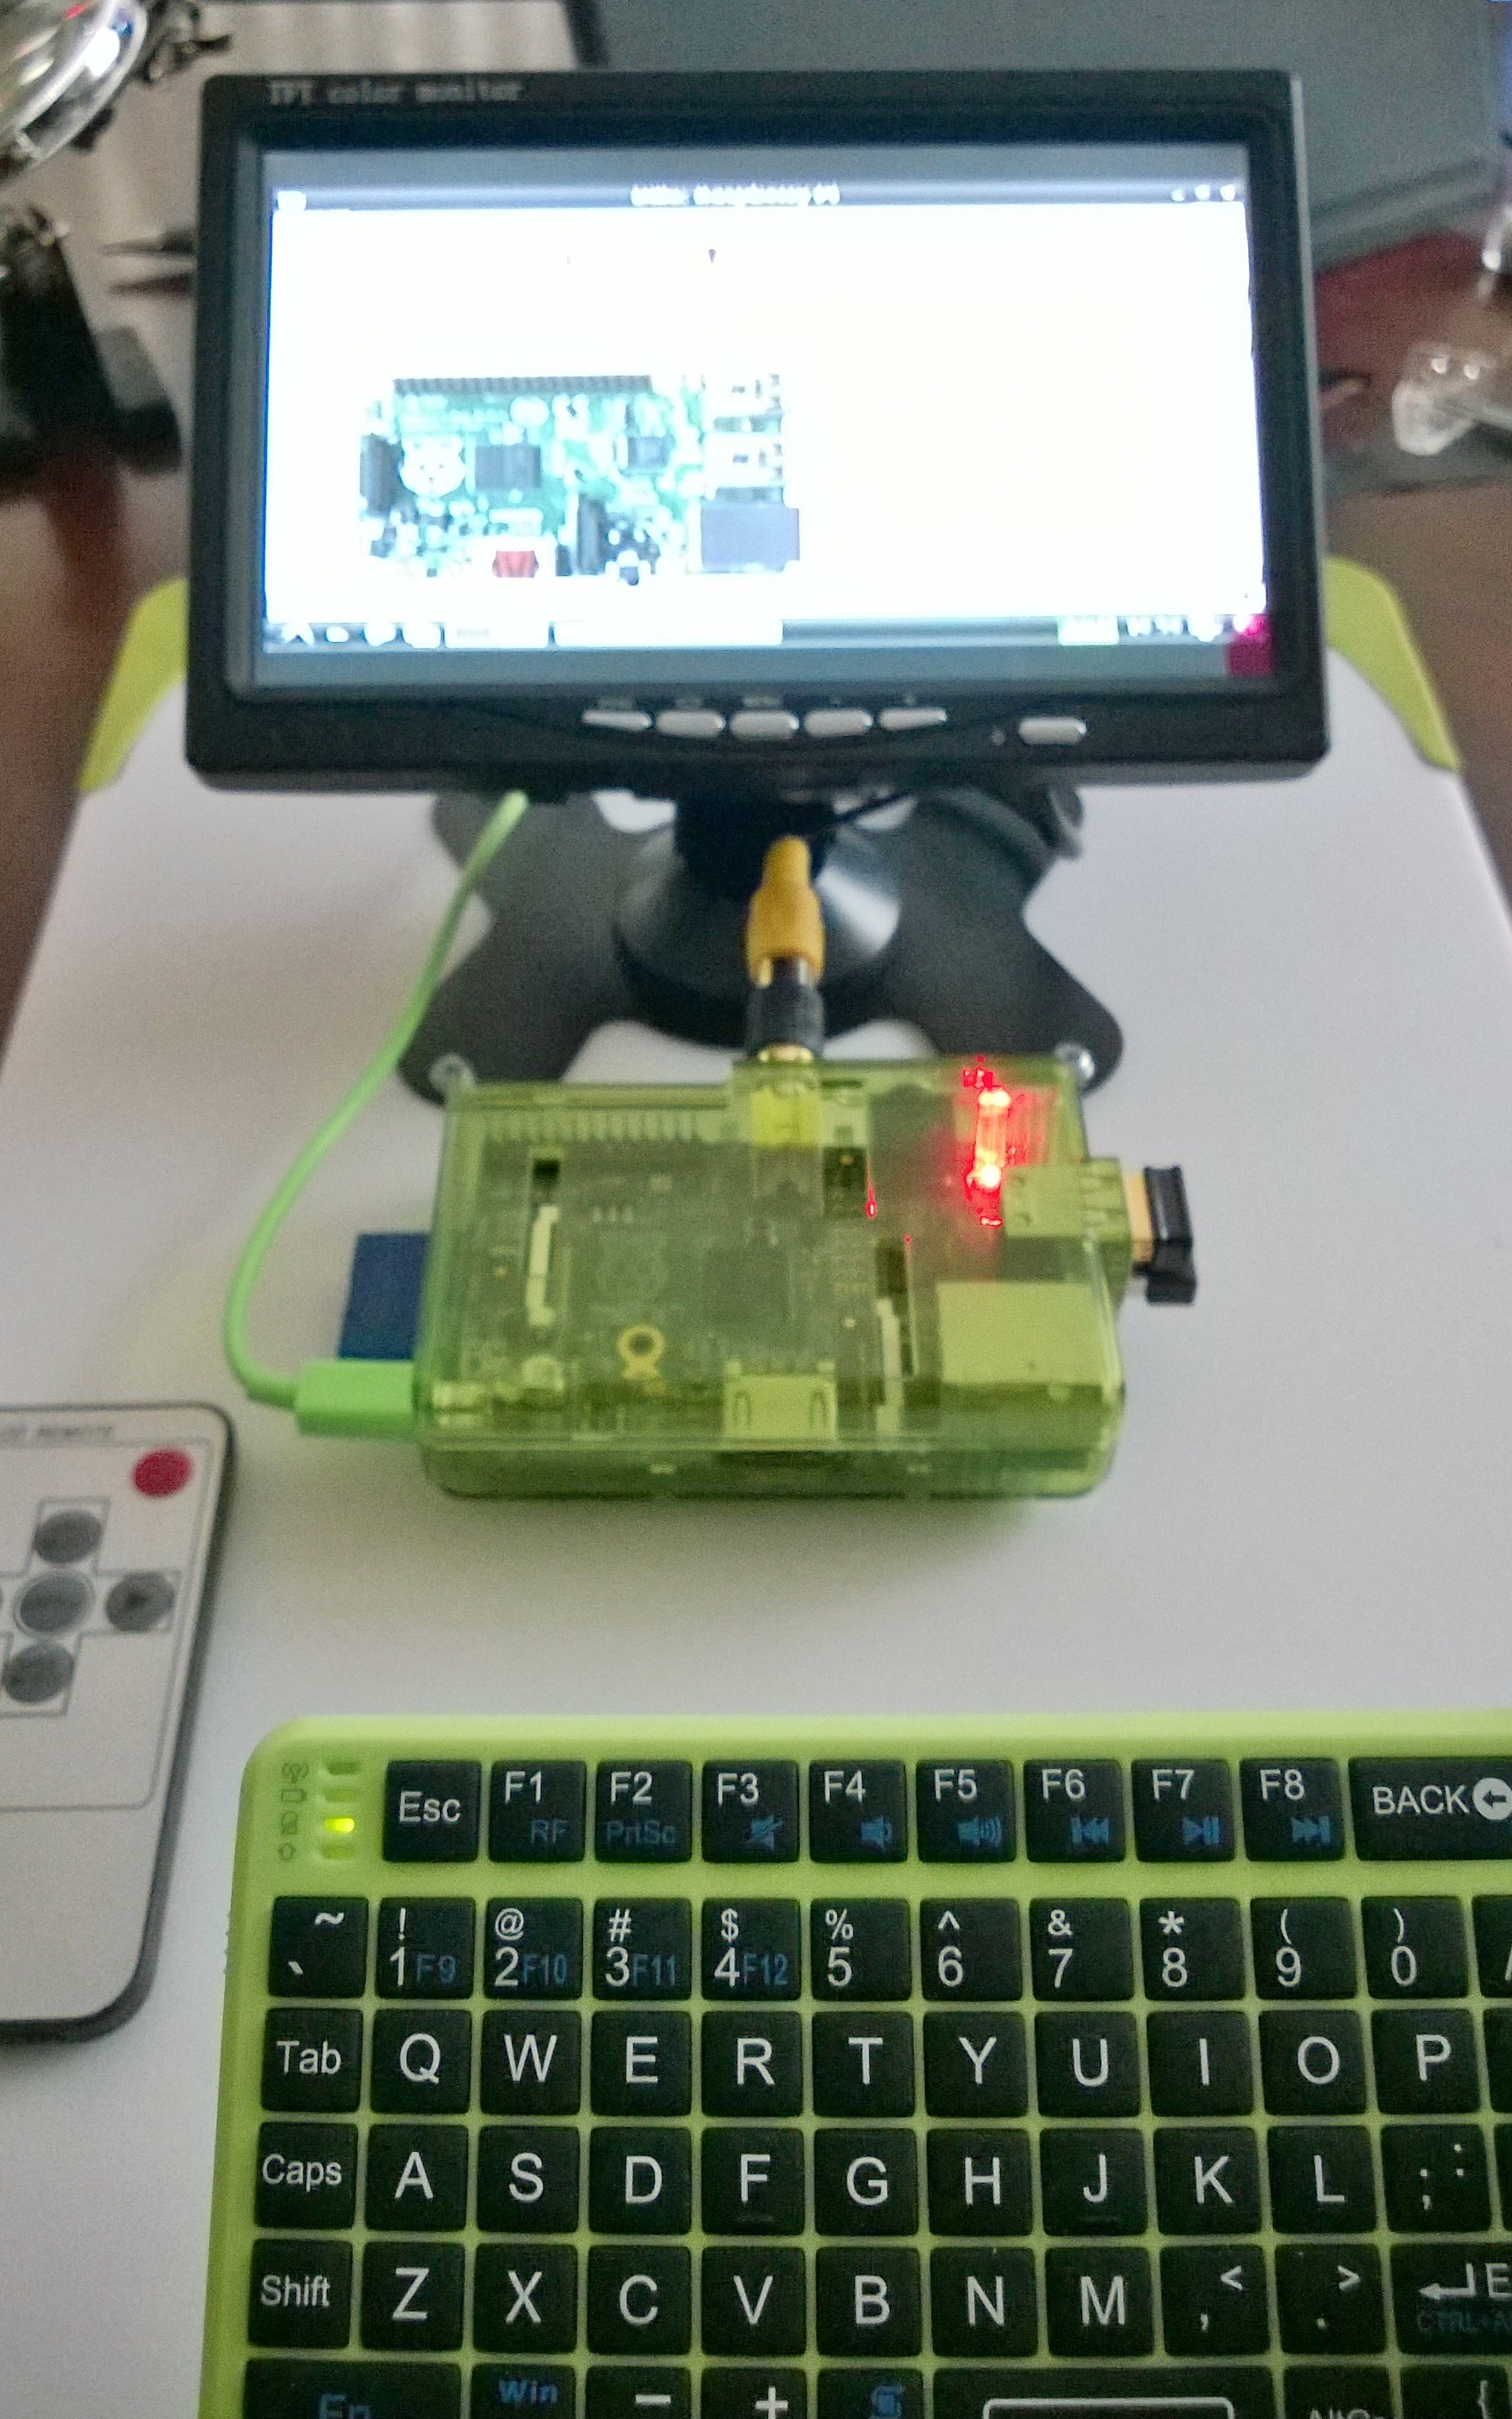 Multi-functional Cutting Board Raspberry Pi